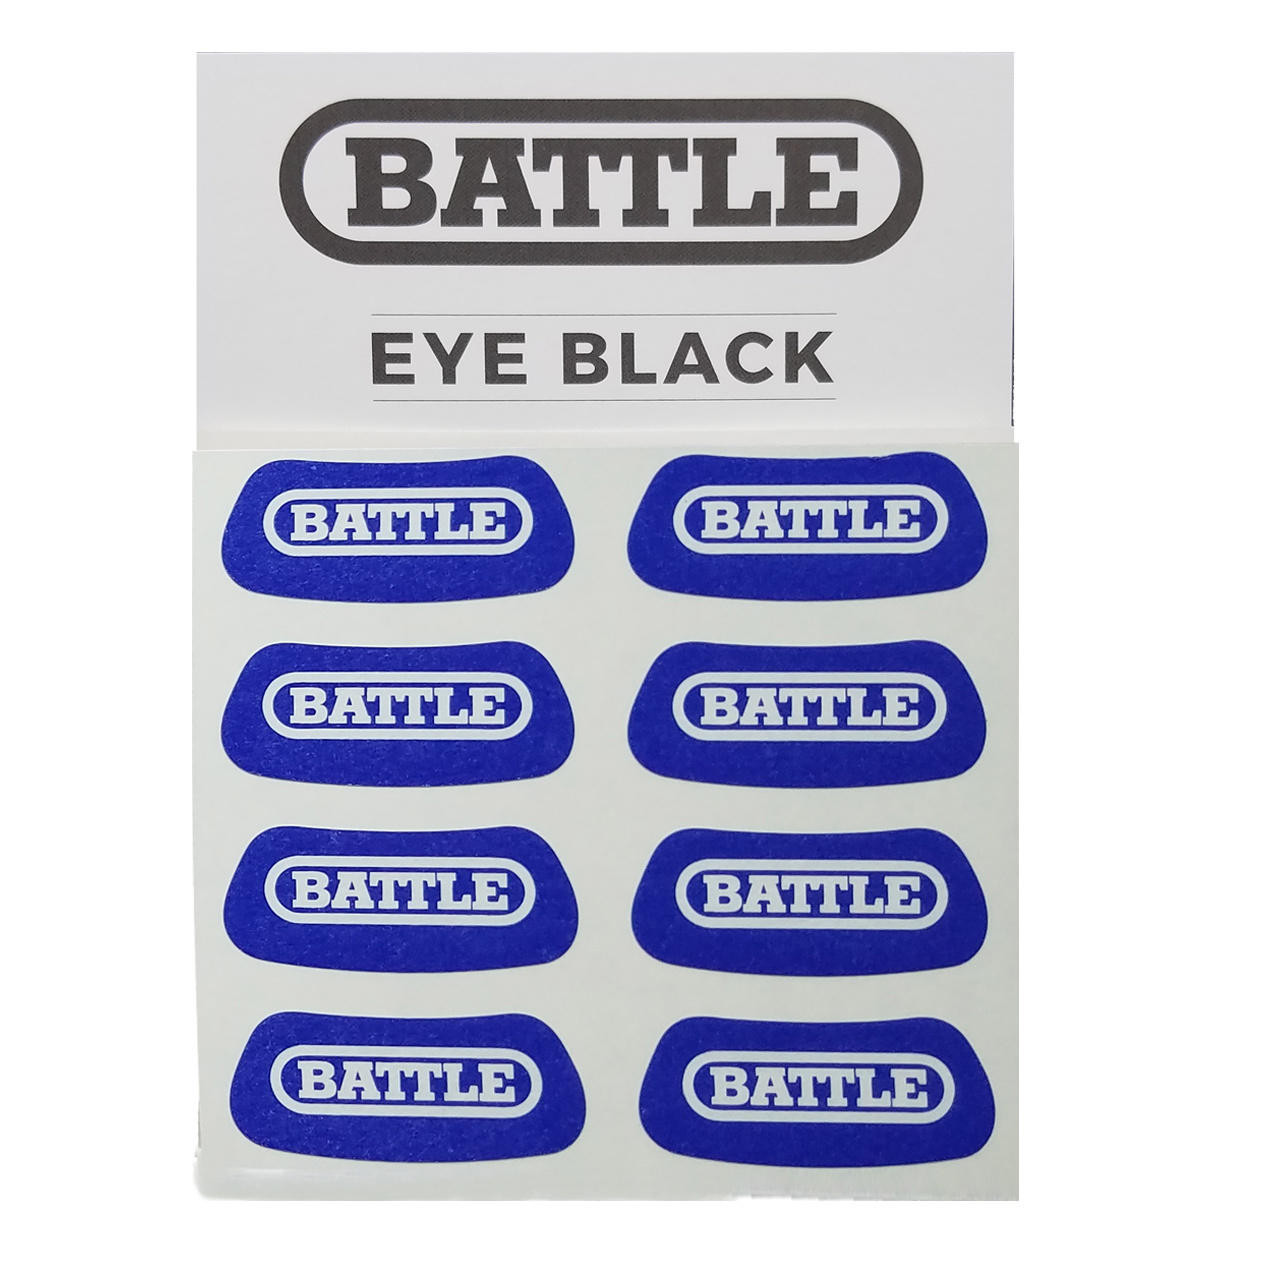 https://cdn11.bigcommerce.com/s-yh4gh/images/stencil/1280x1280/products/915/5041/battle-sports-battle-eye-black-anti-glare-stickers__69733.1688730668.jpg?c=2